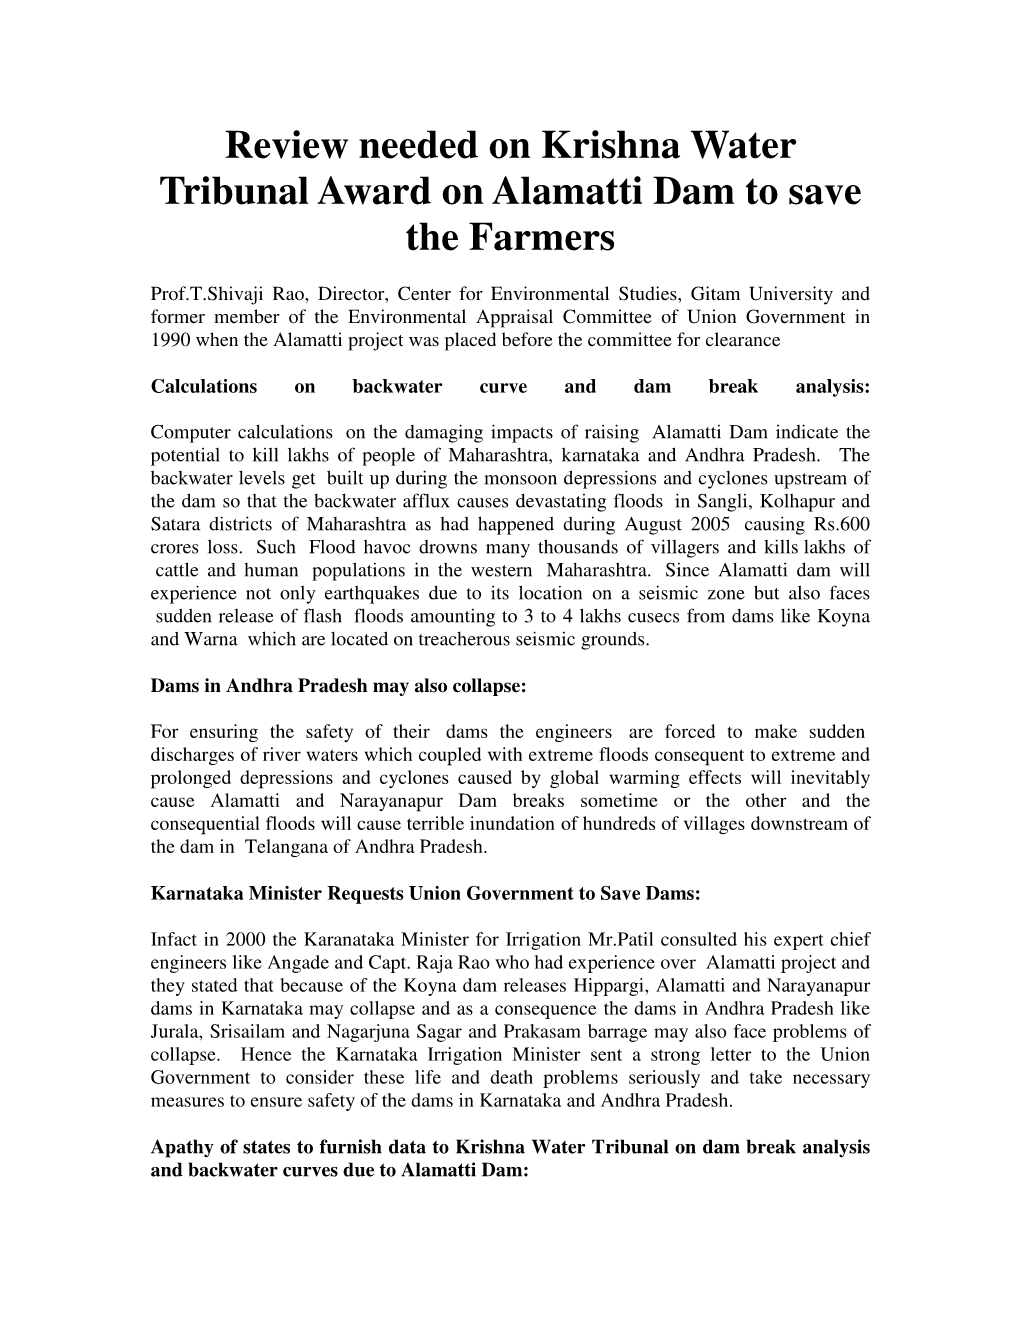 Review Needed on Krishna Water Tribunal Award on Alamatti Dam to Save the Farmers